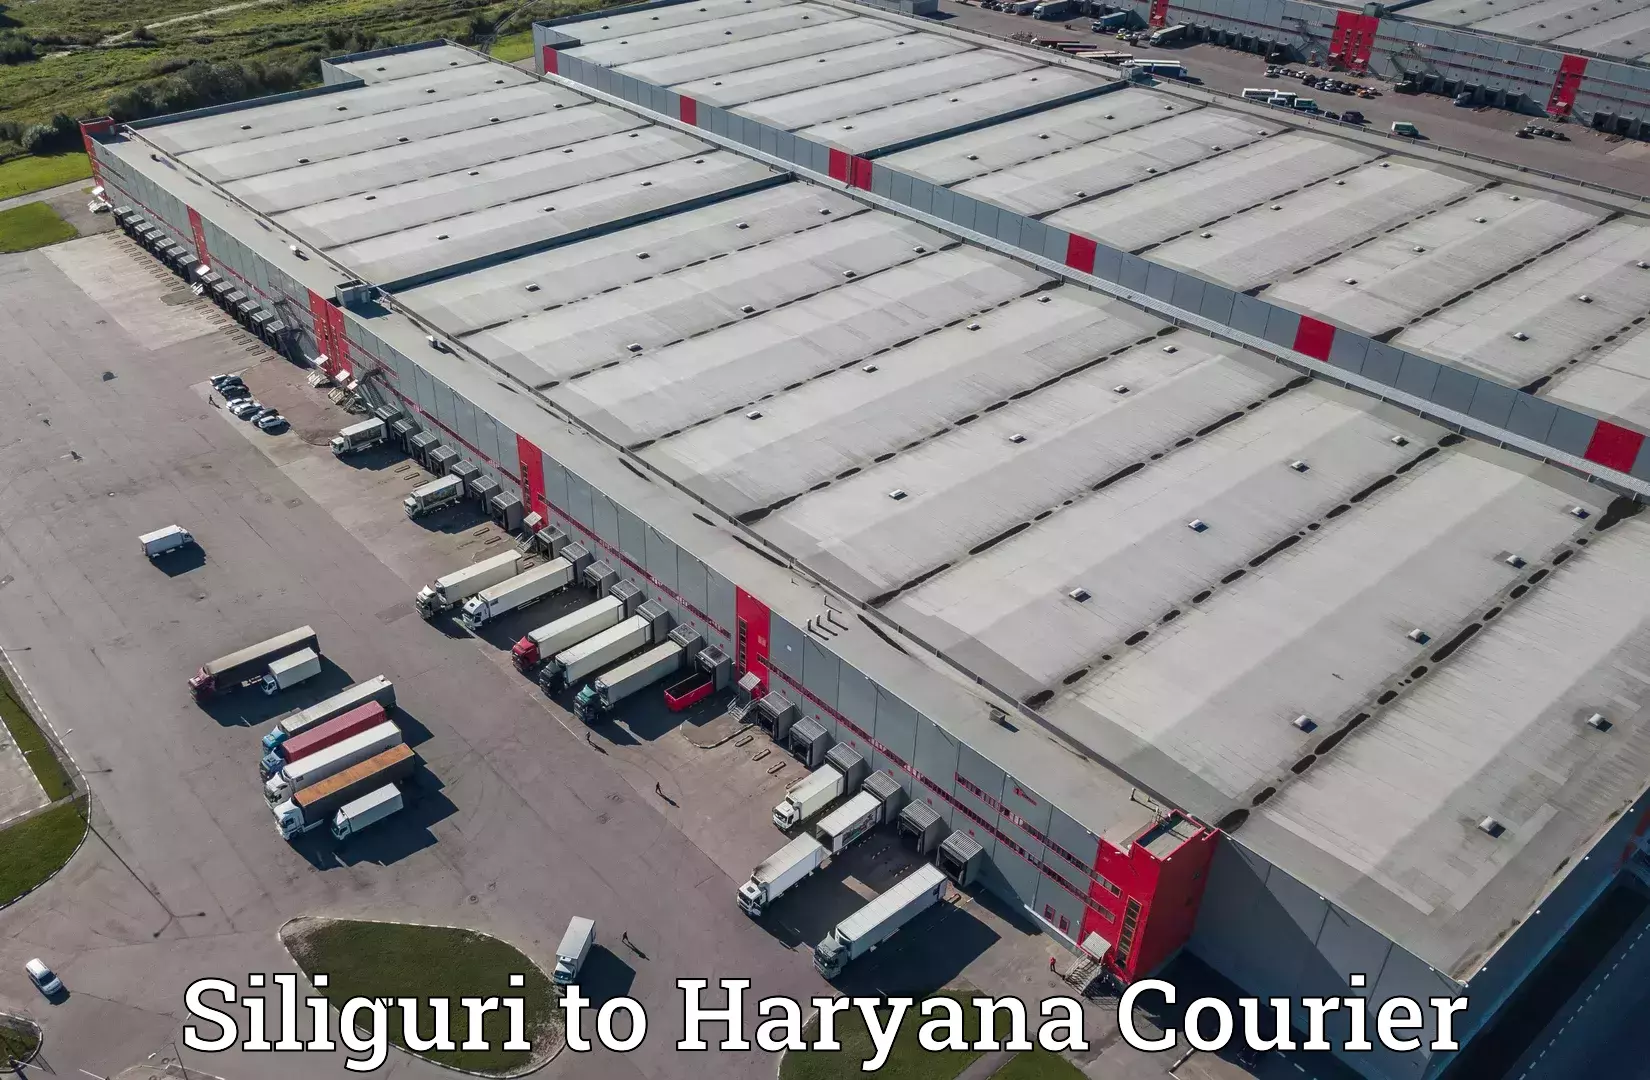 Courier service innovation Siliguri to NCR Haryana